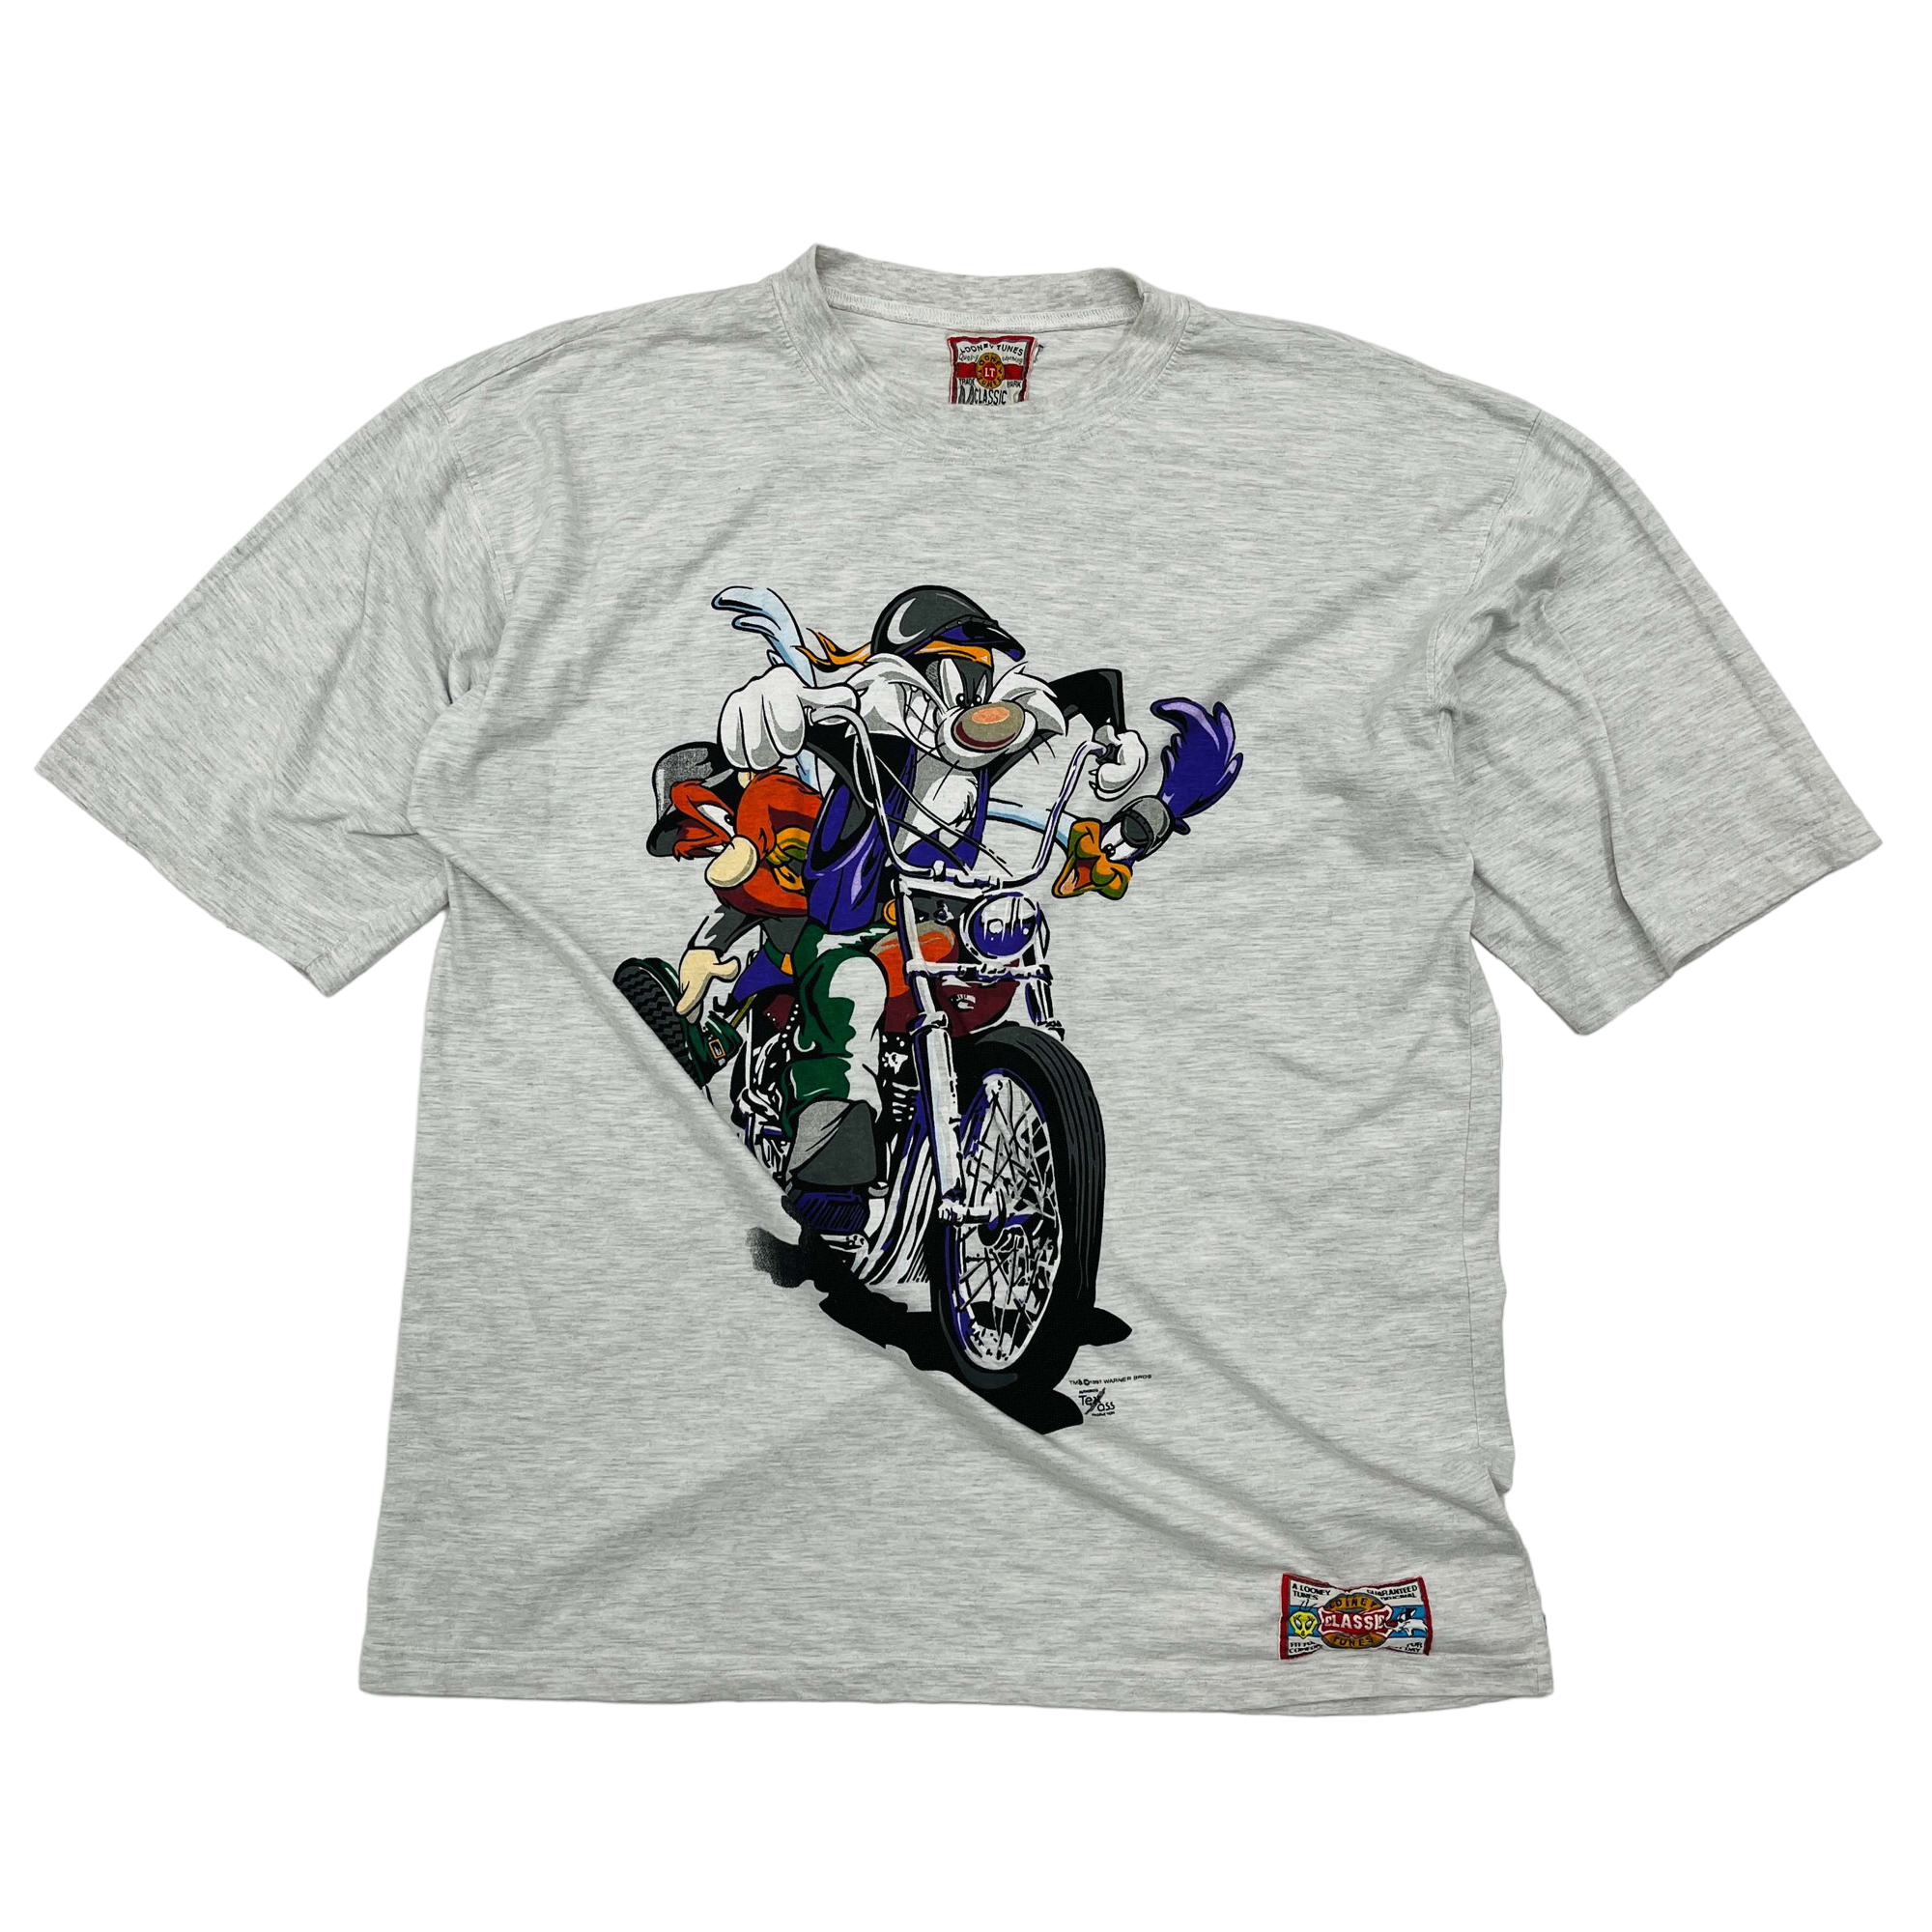 Looney Tunes Silvester, Yosemite Sam and Roadrunner Motorbike T-Shirt - 2XL